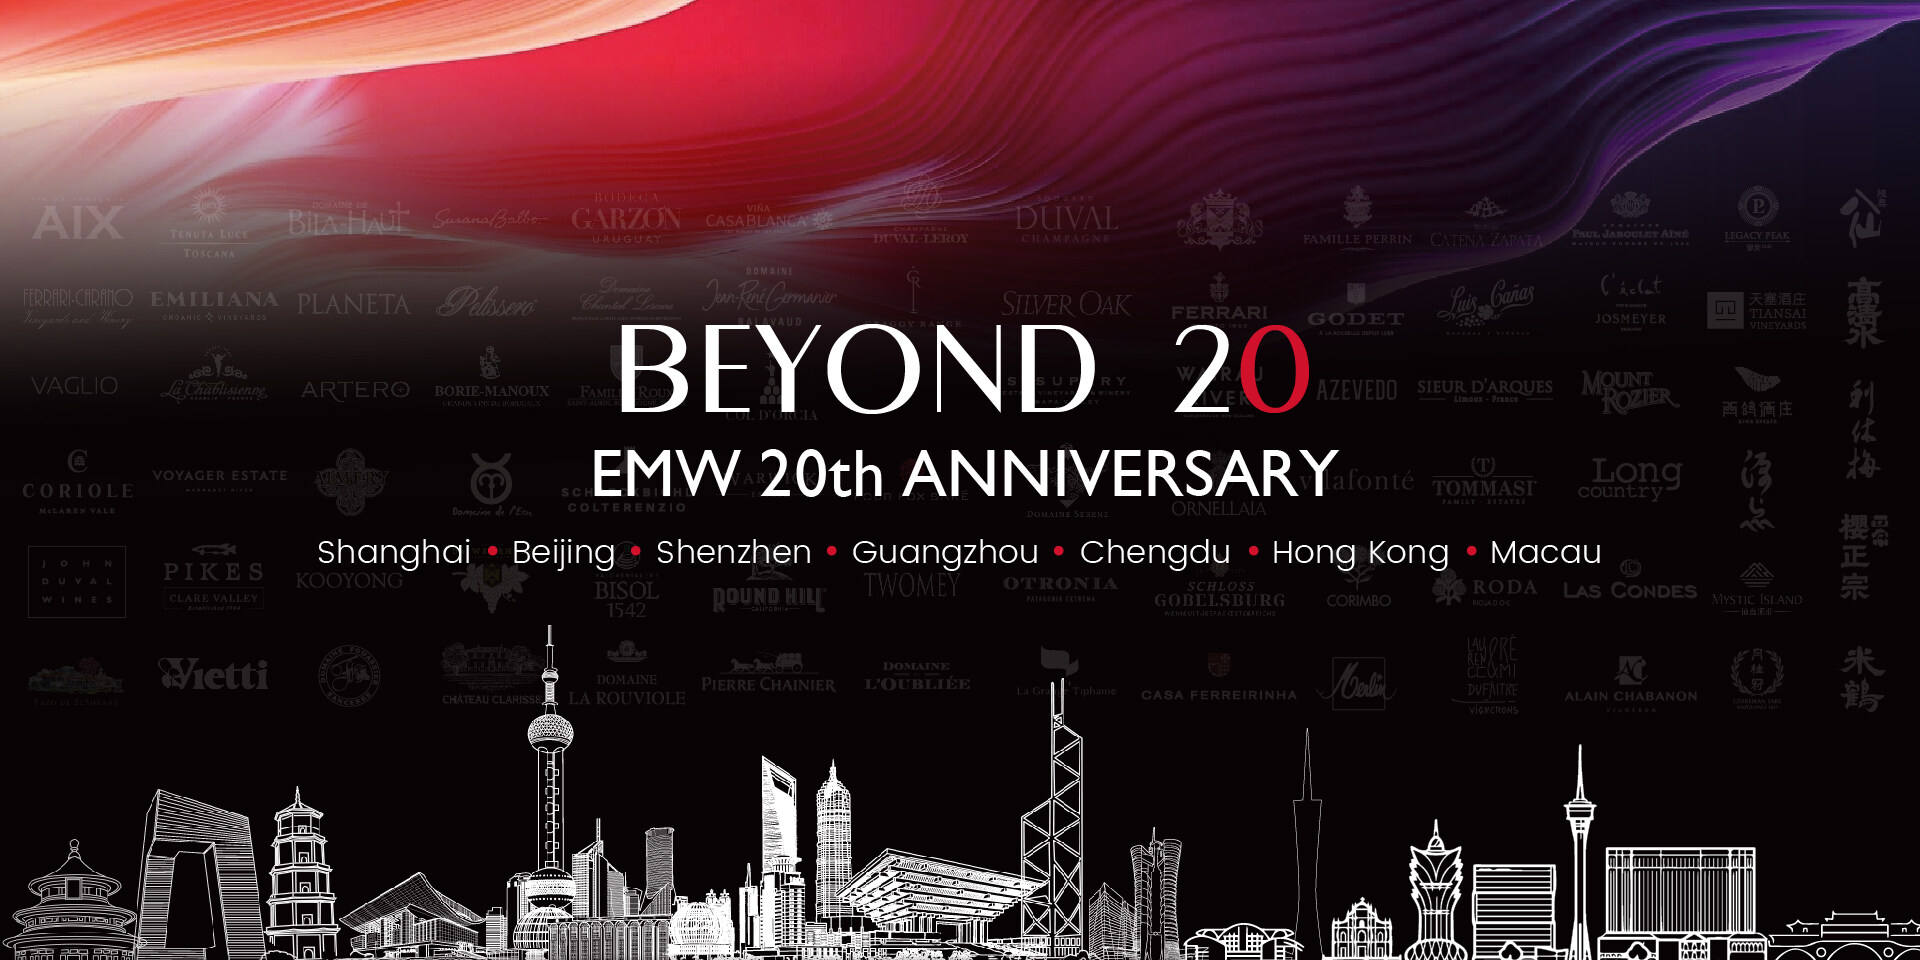 Beyond 20: EMW 20th Anniversary Celebration